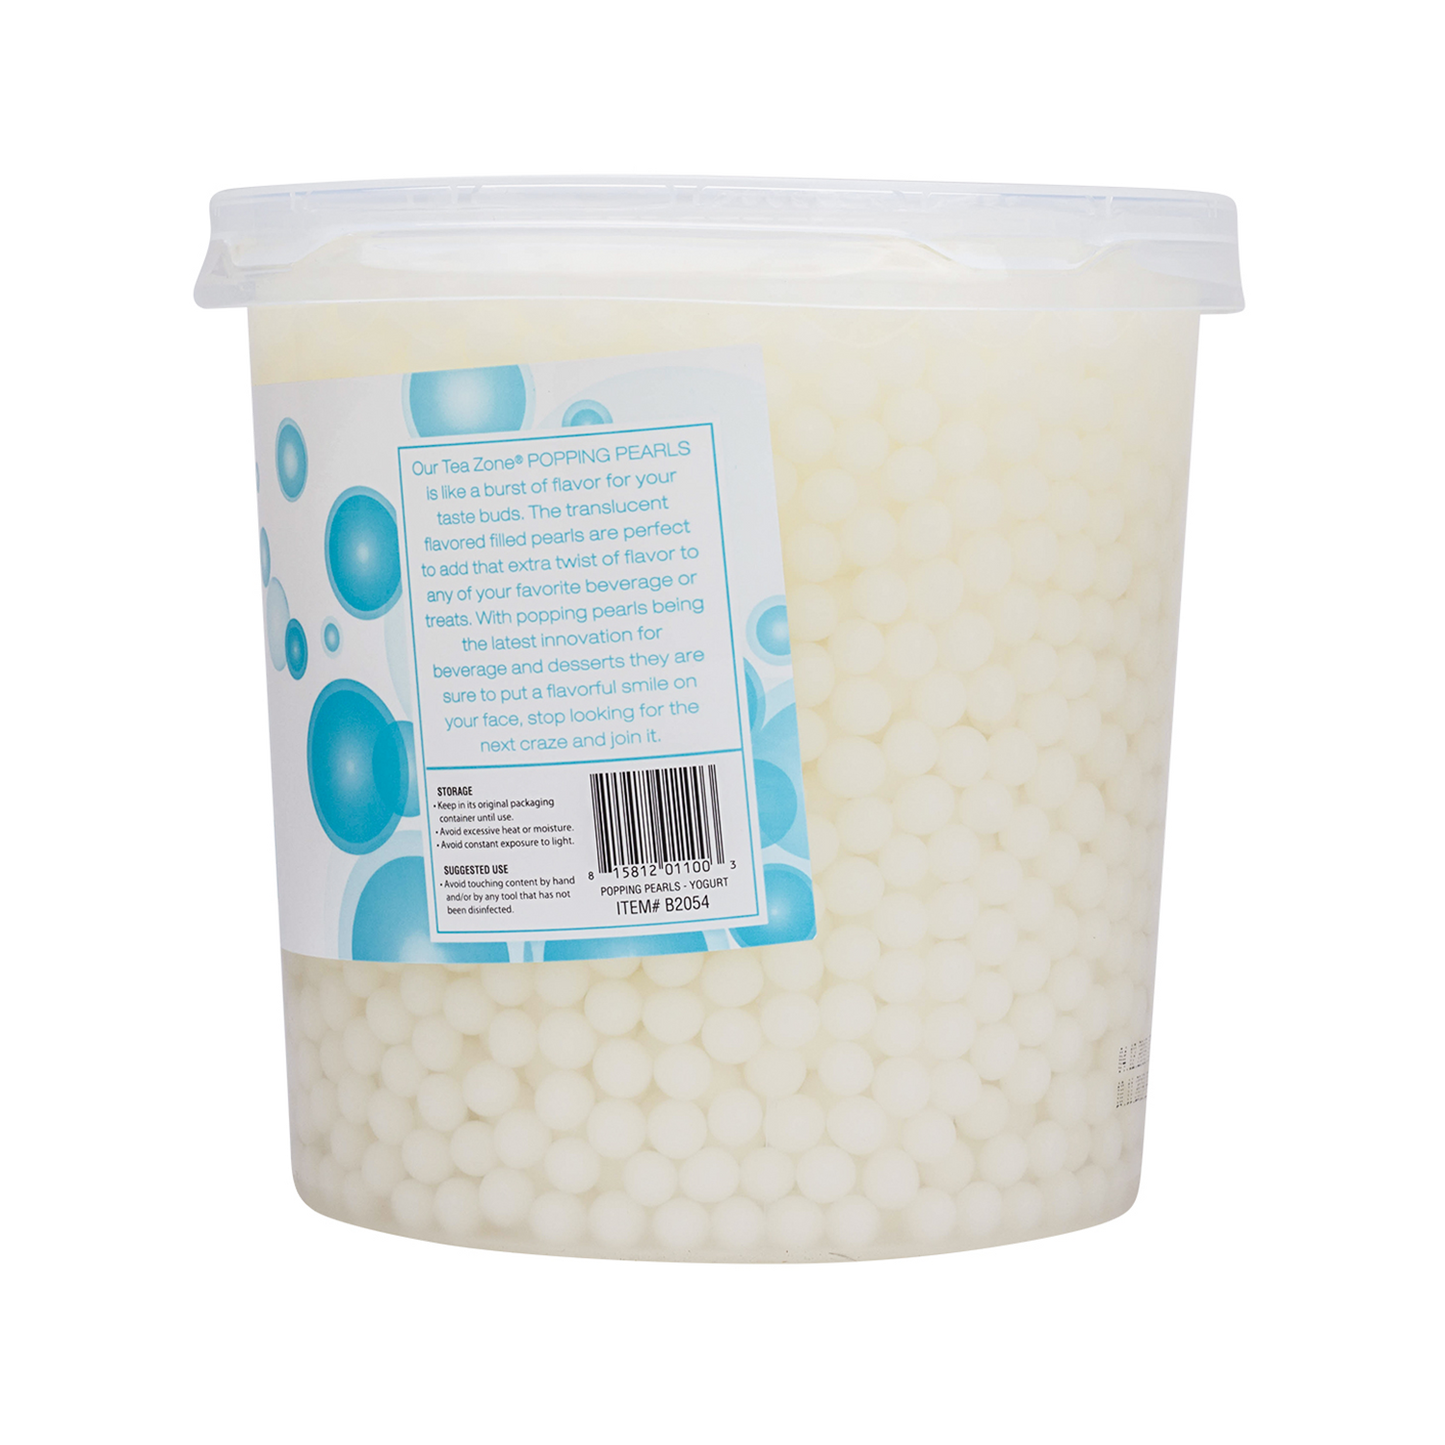 Tea Zone Yogurt Popping Pearls (7 lbs) case of 4